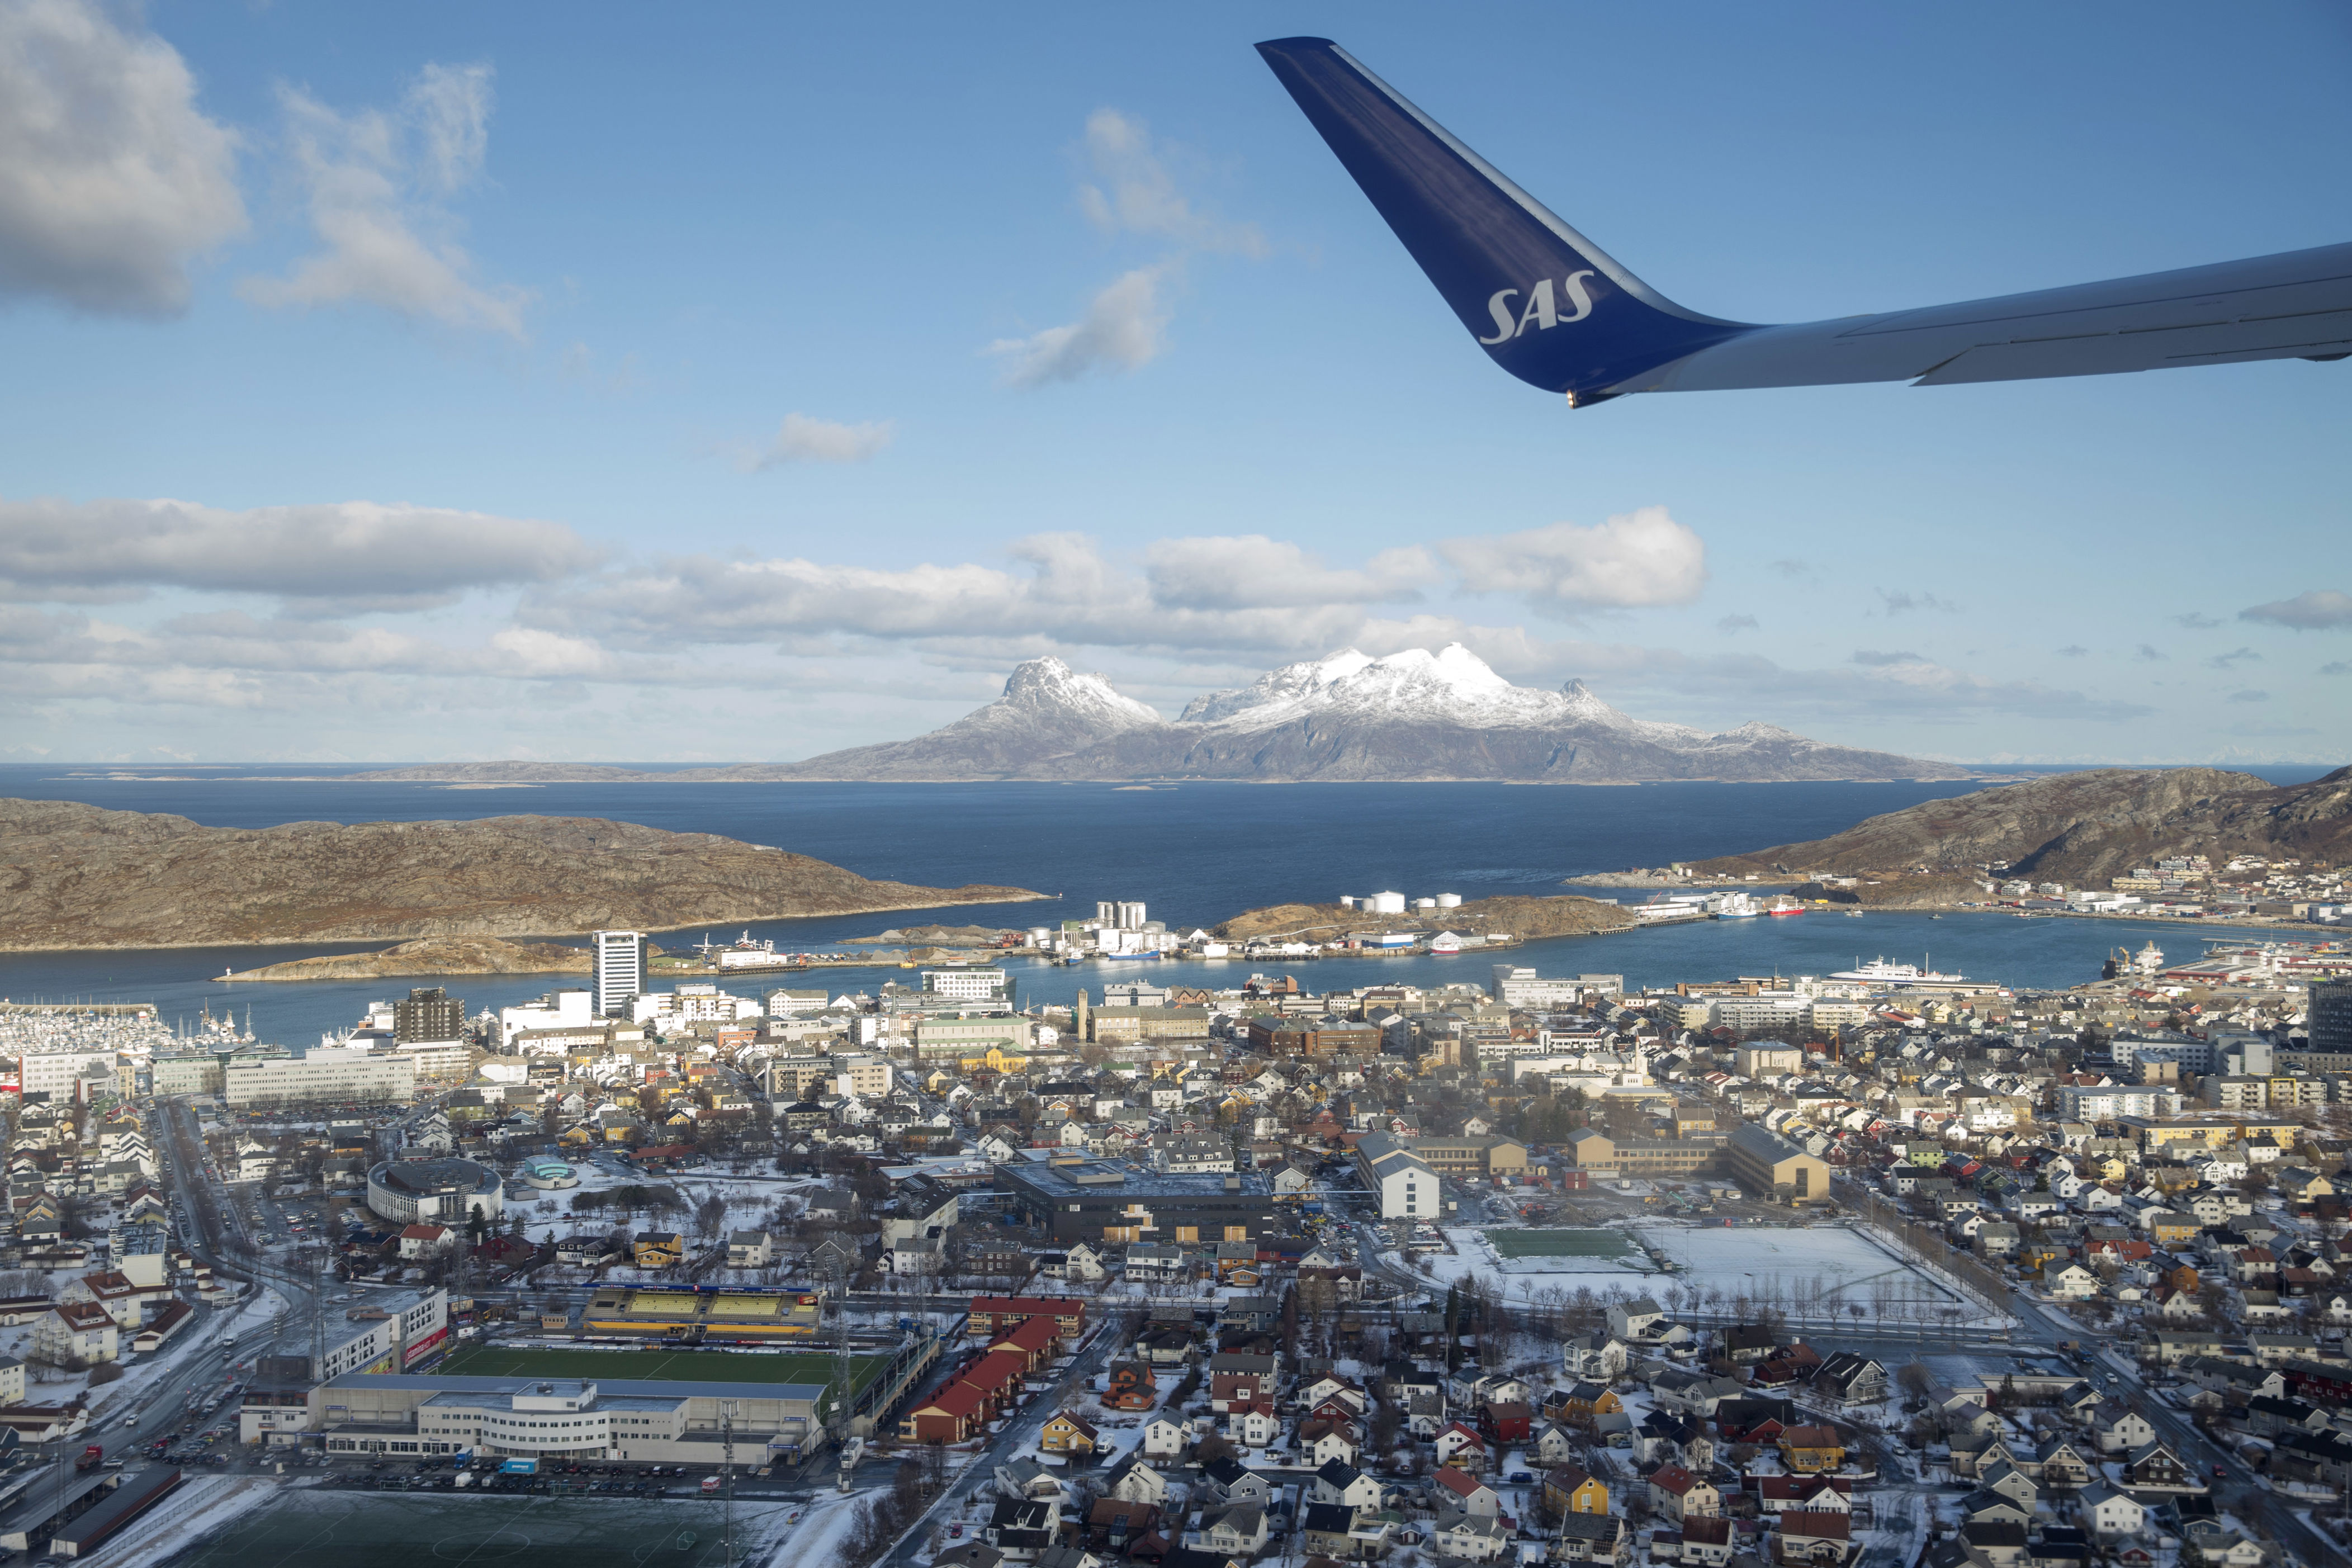 flere samtidige feil stanset flytrafikken i nord-norge